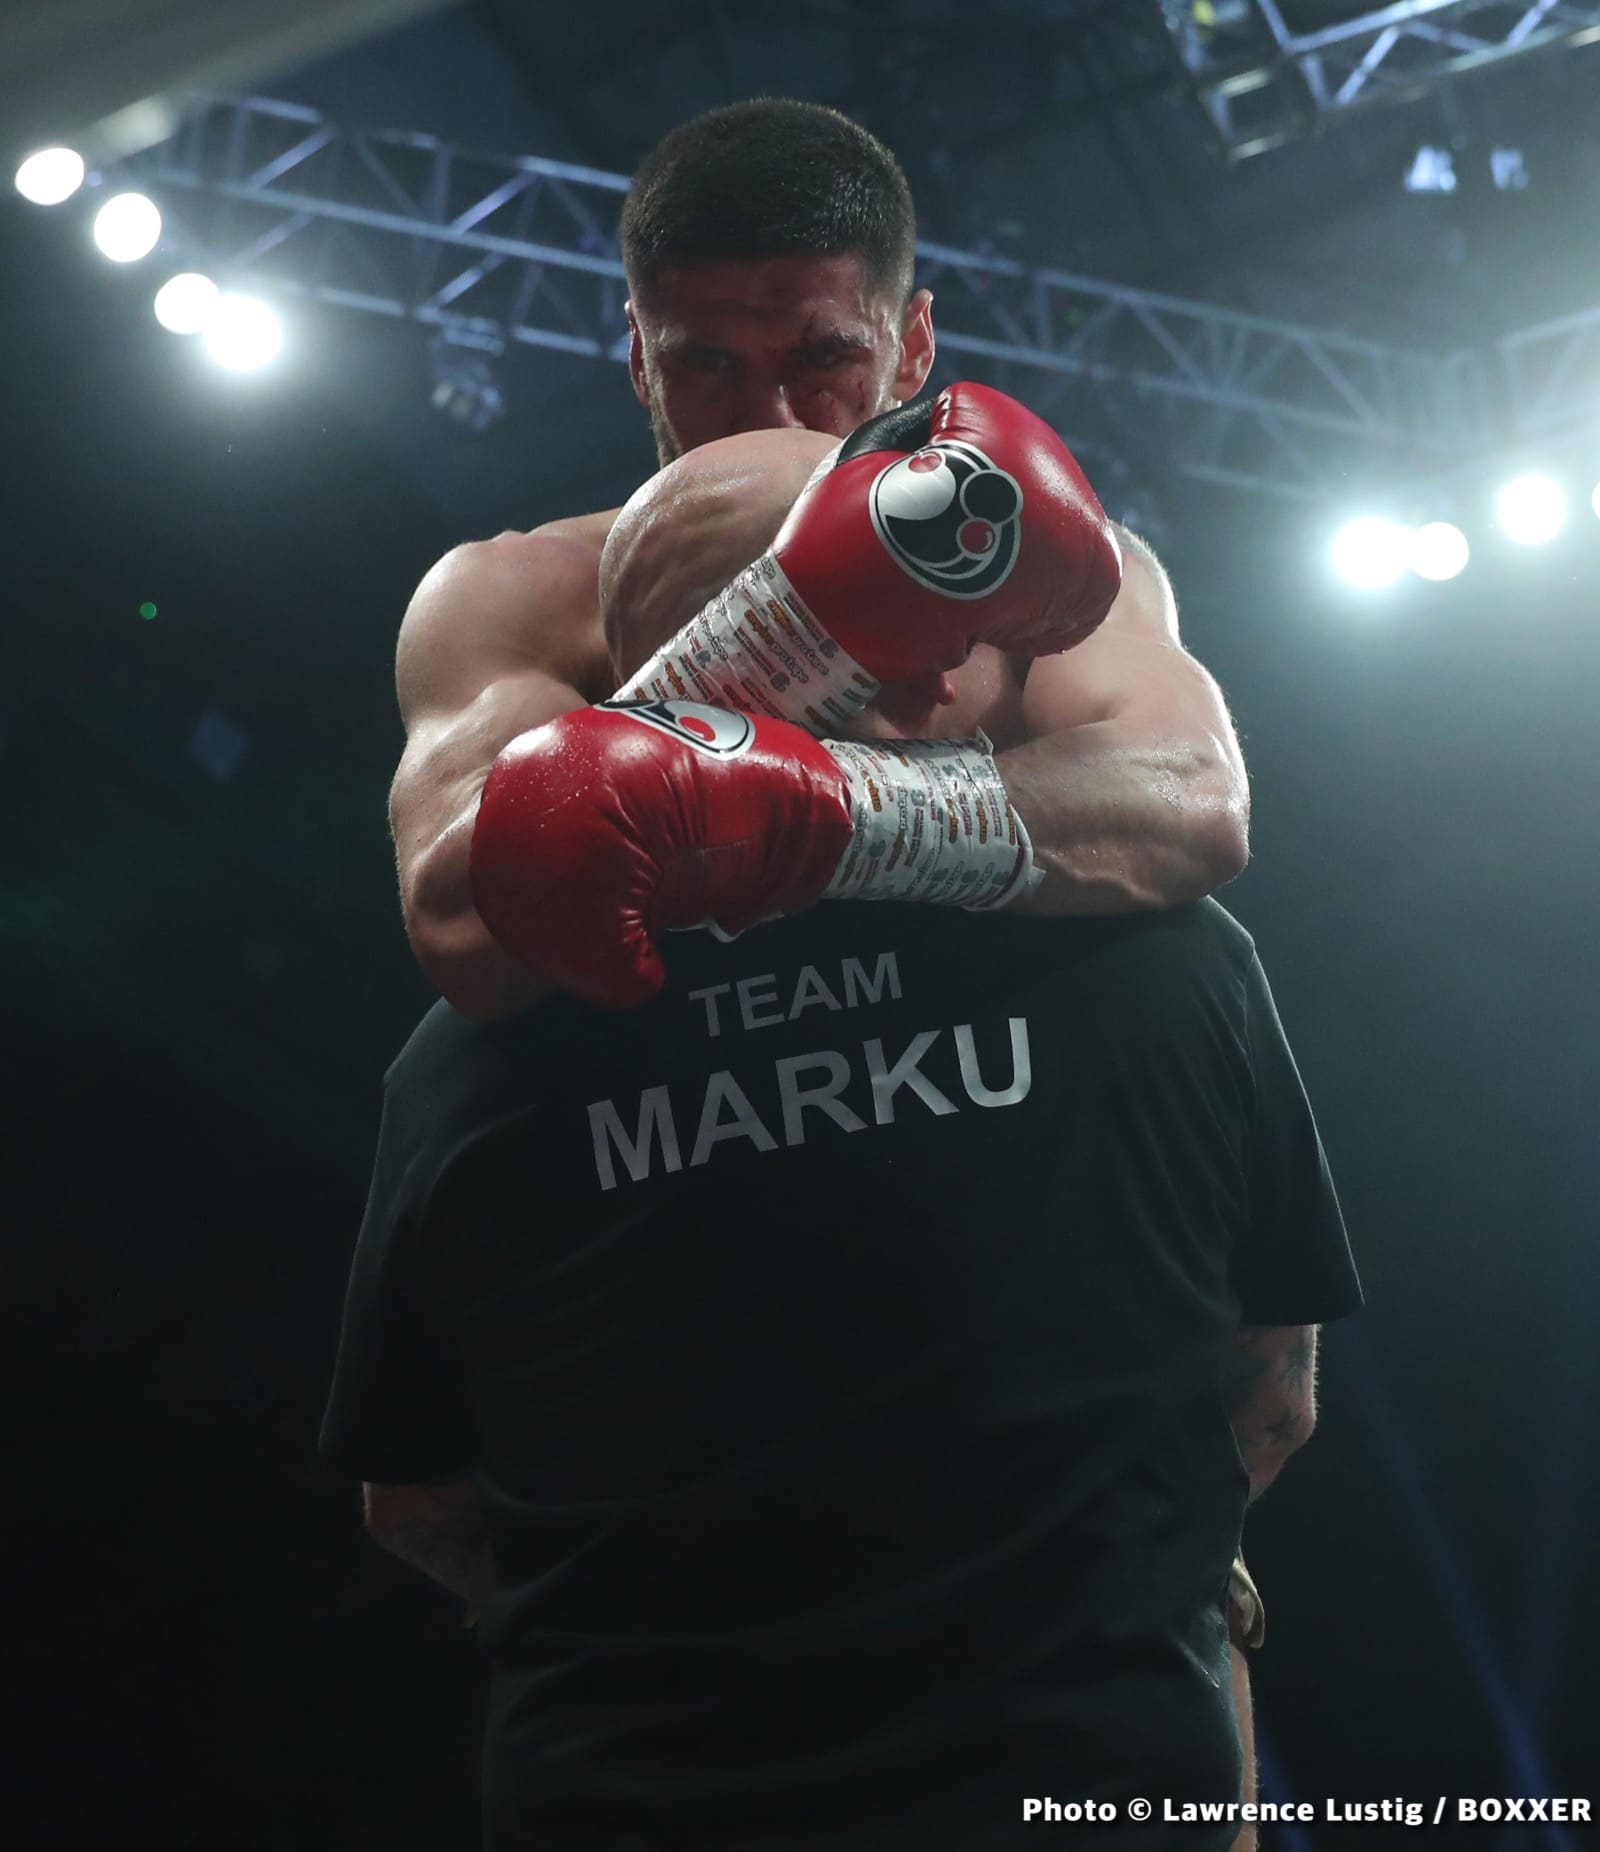 Photos: Savannah Marshall Knocks Out Hermans In Newcastle